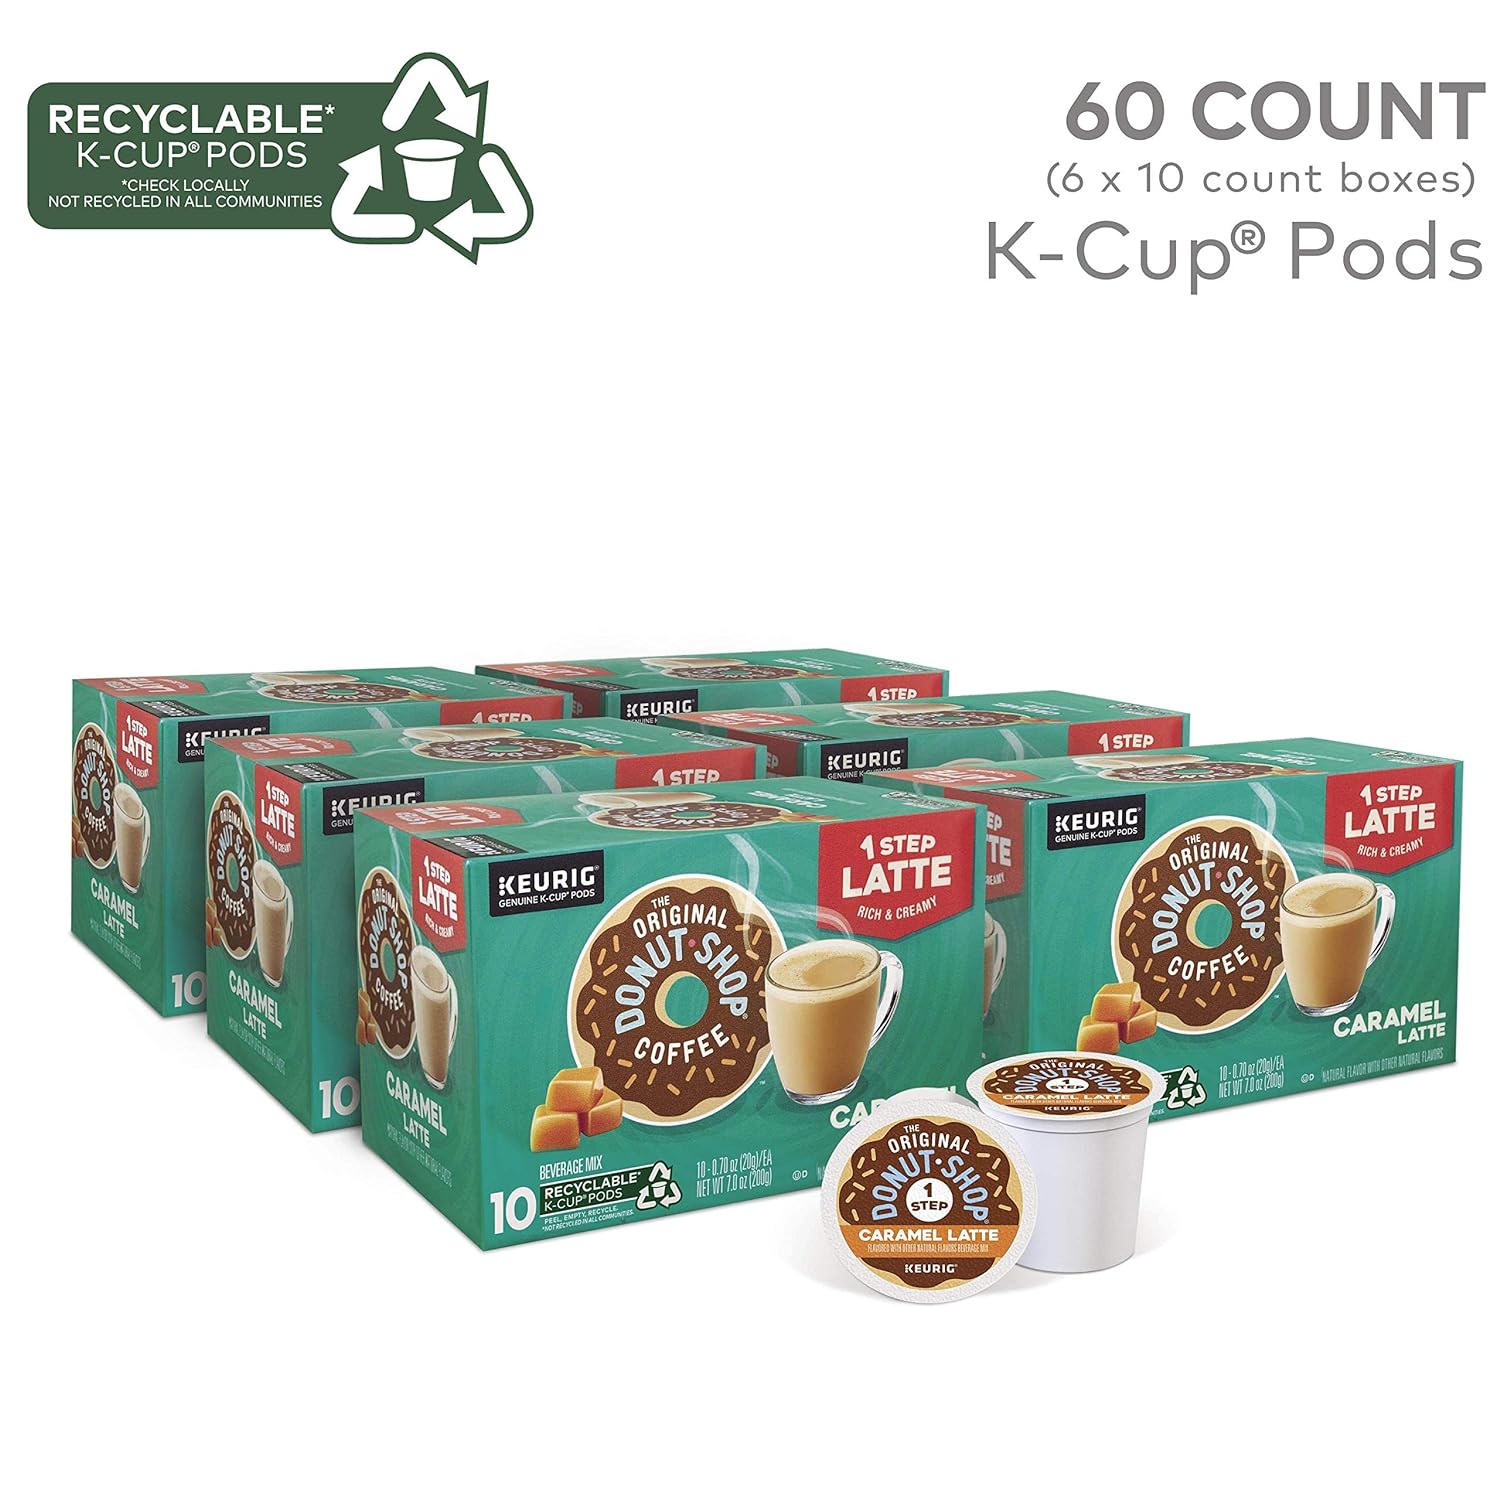 The Original Donut Shop Mocha Latte, Single-Serve Keurig K-Cup Pods, Flavored Coffee Pods, 20 Count